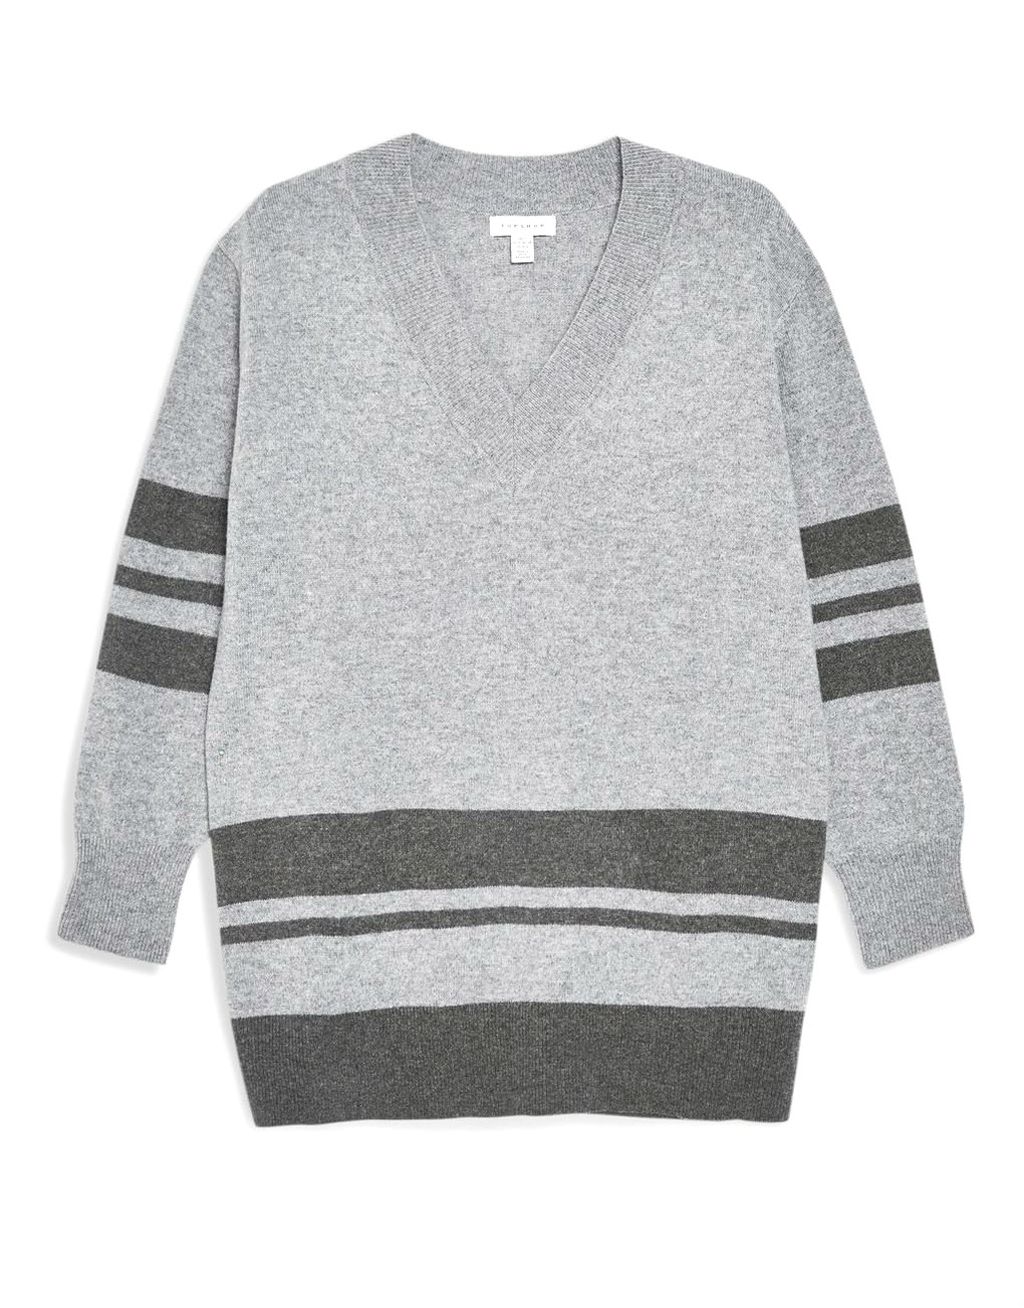 BIK - pulover od kašmira, Topshop, 50 funti (411 kuna)